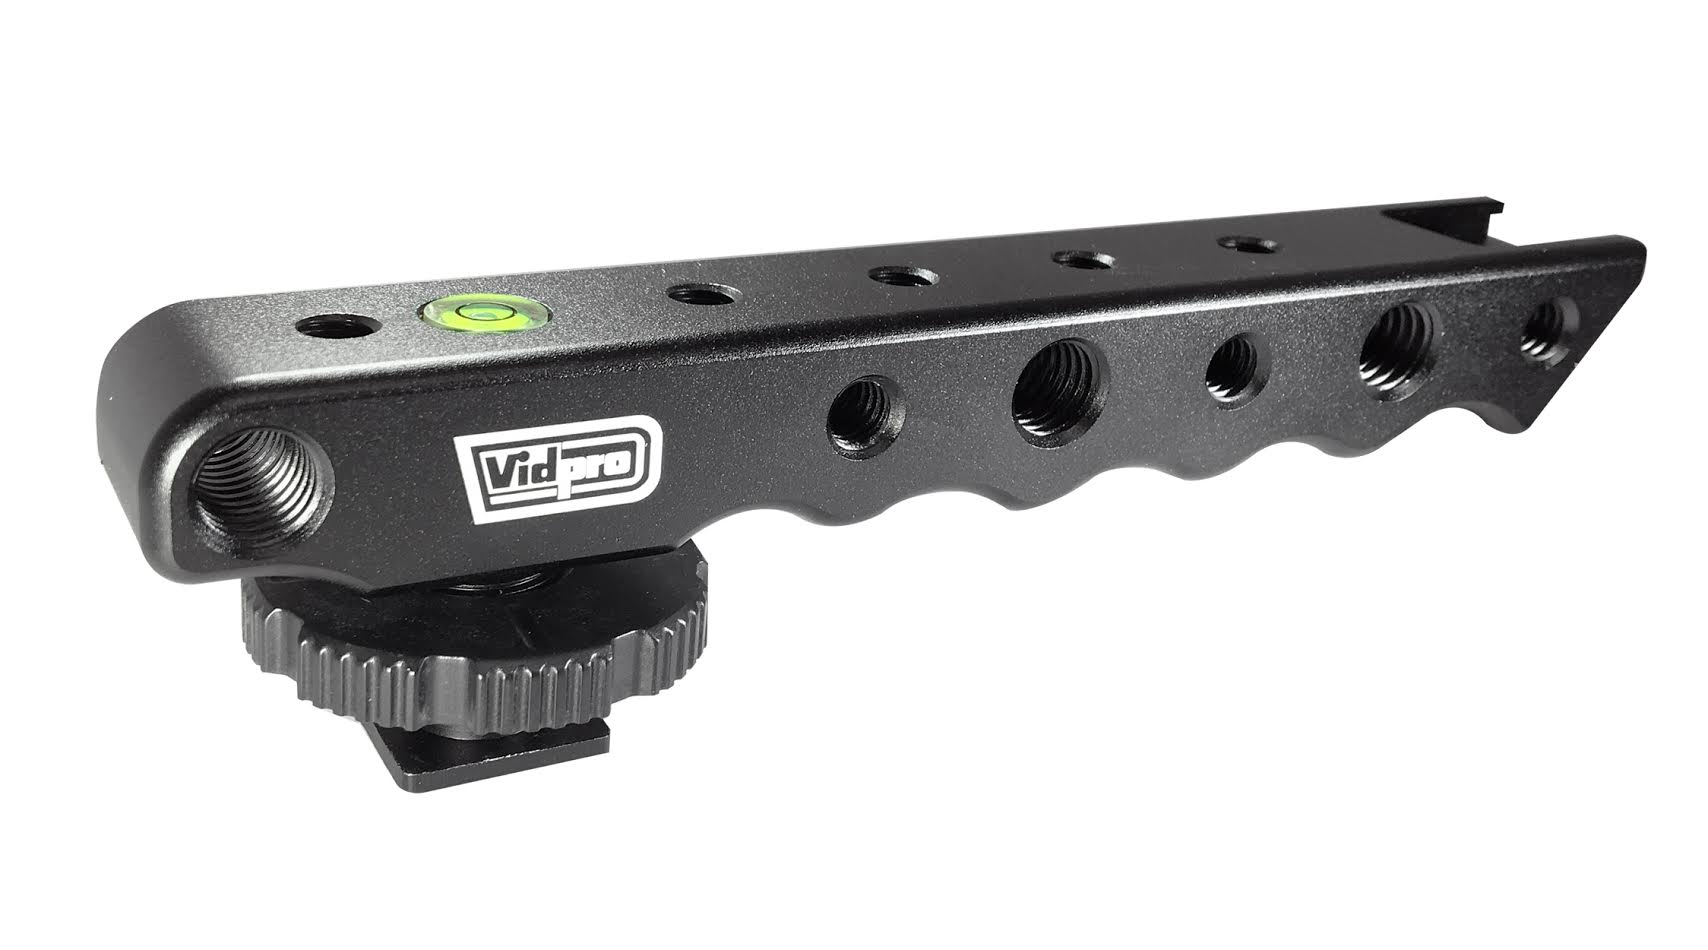 Video Stabilizers for Vivitar DVR 508HD Camcorder